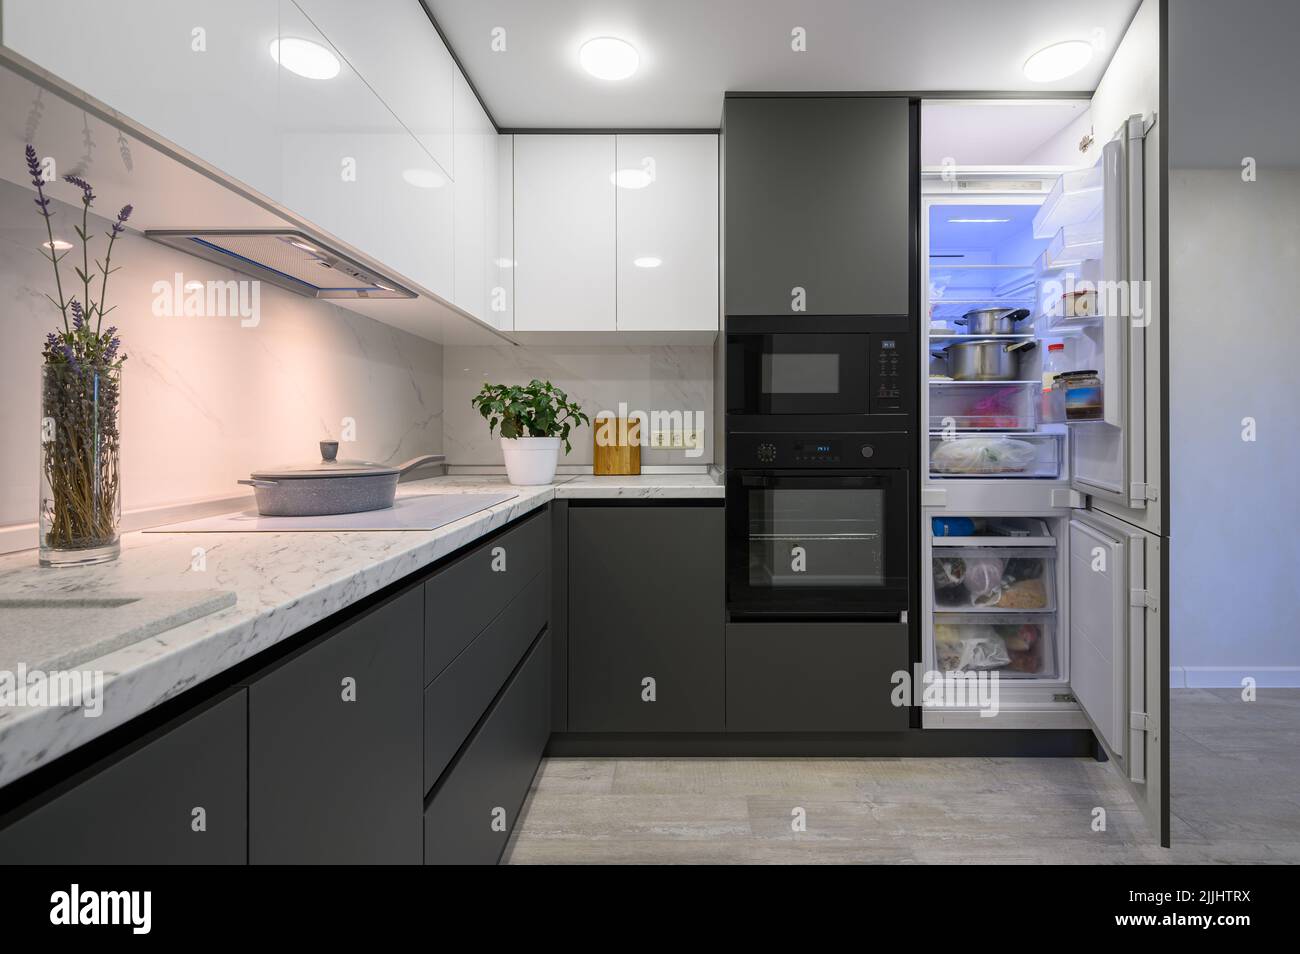 Modern simple trendy dark grey and white kitchen with fridge open Stock Photo